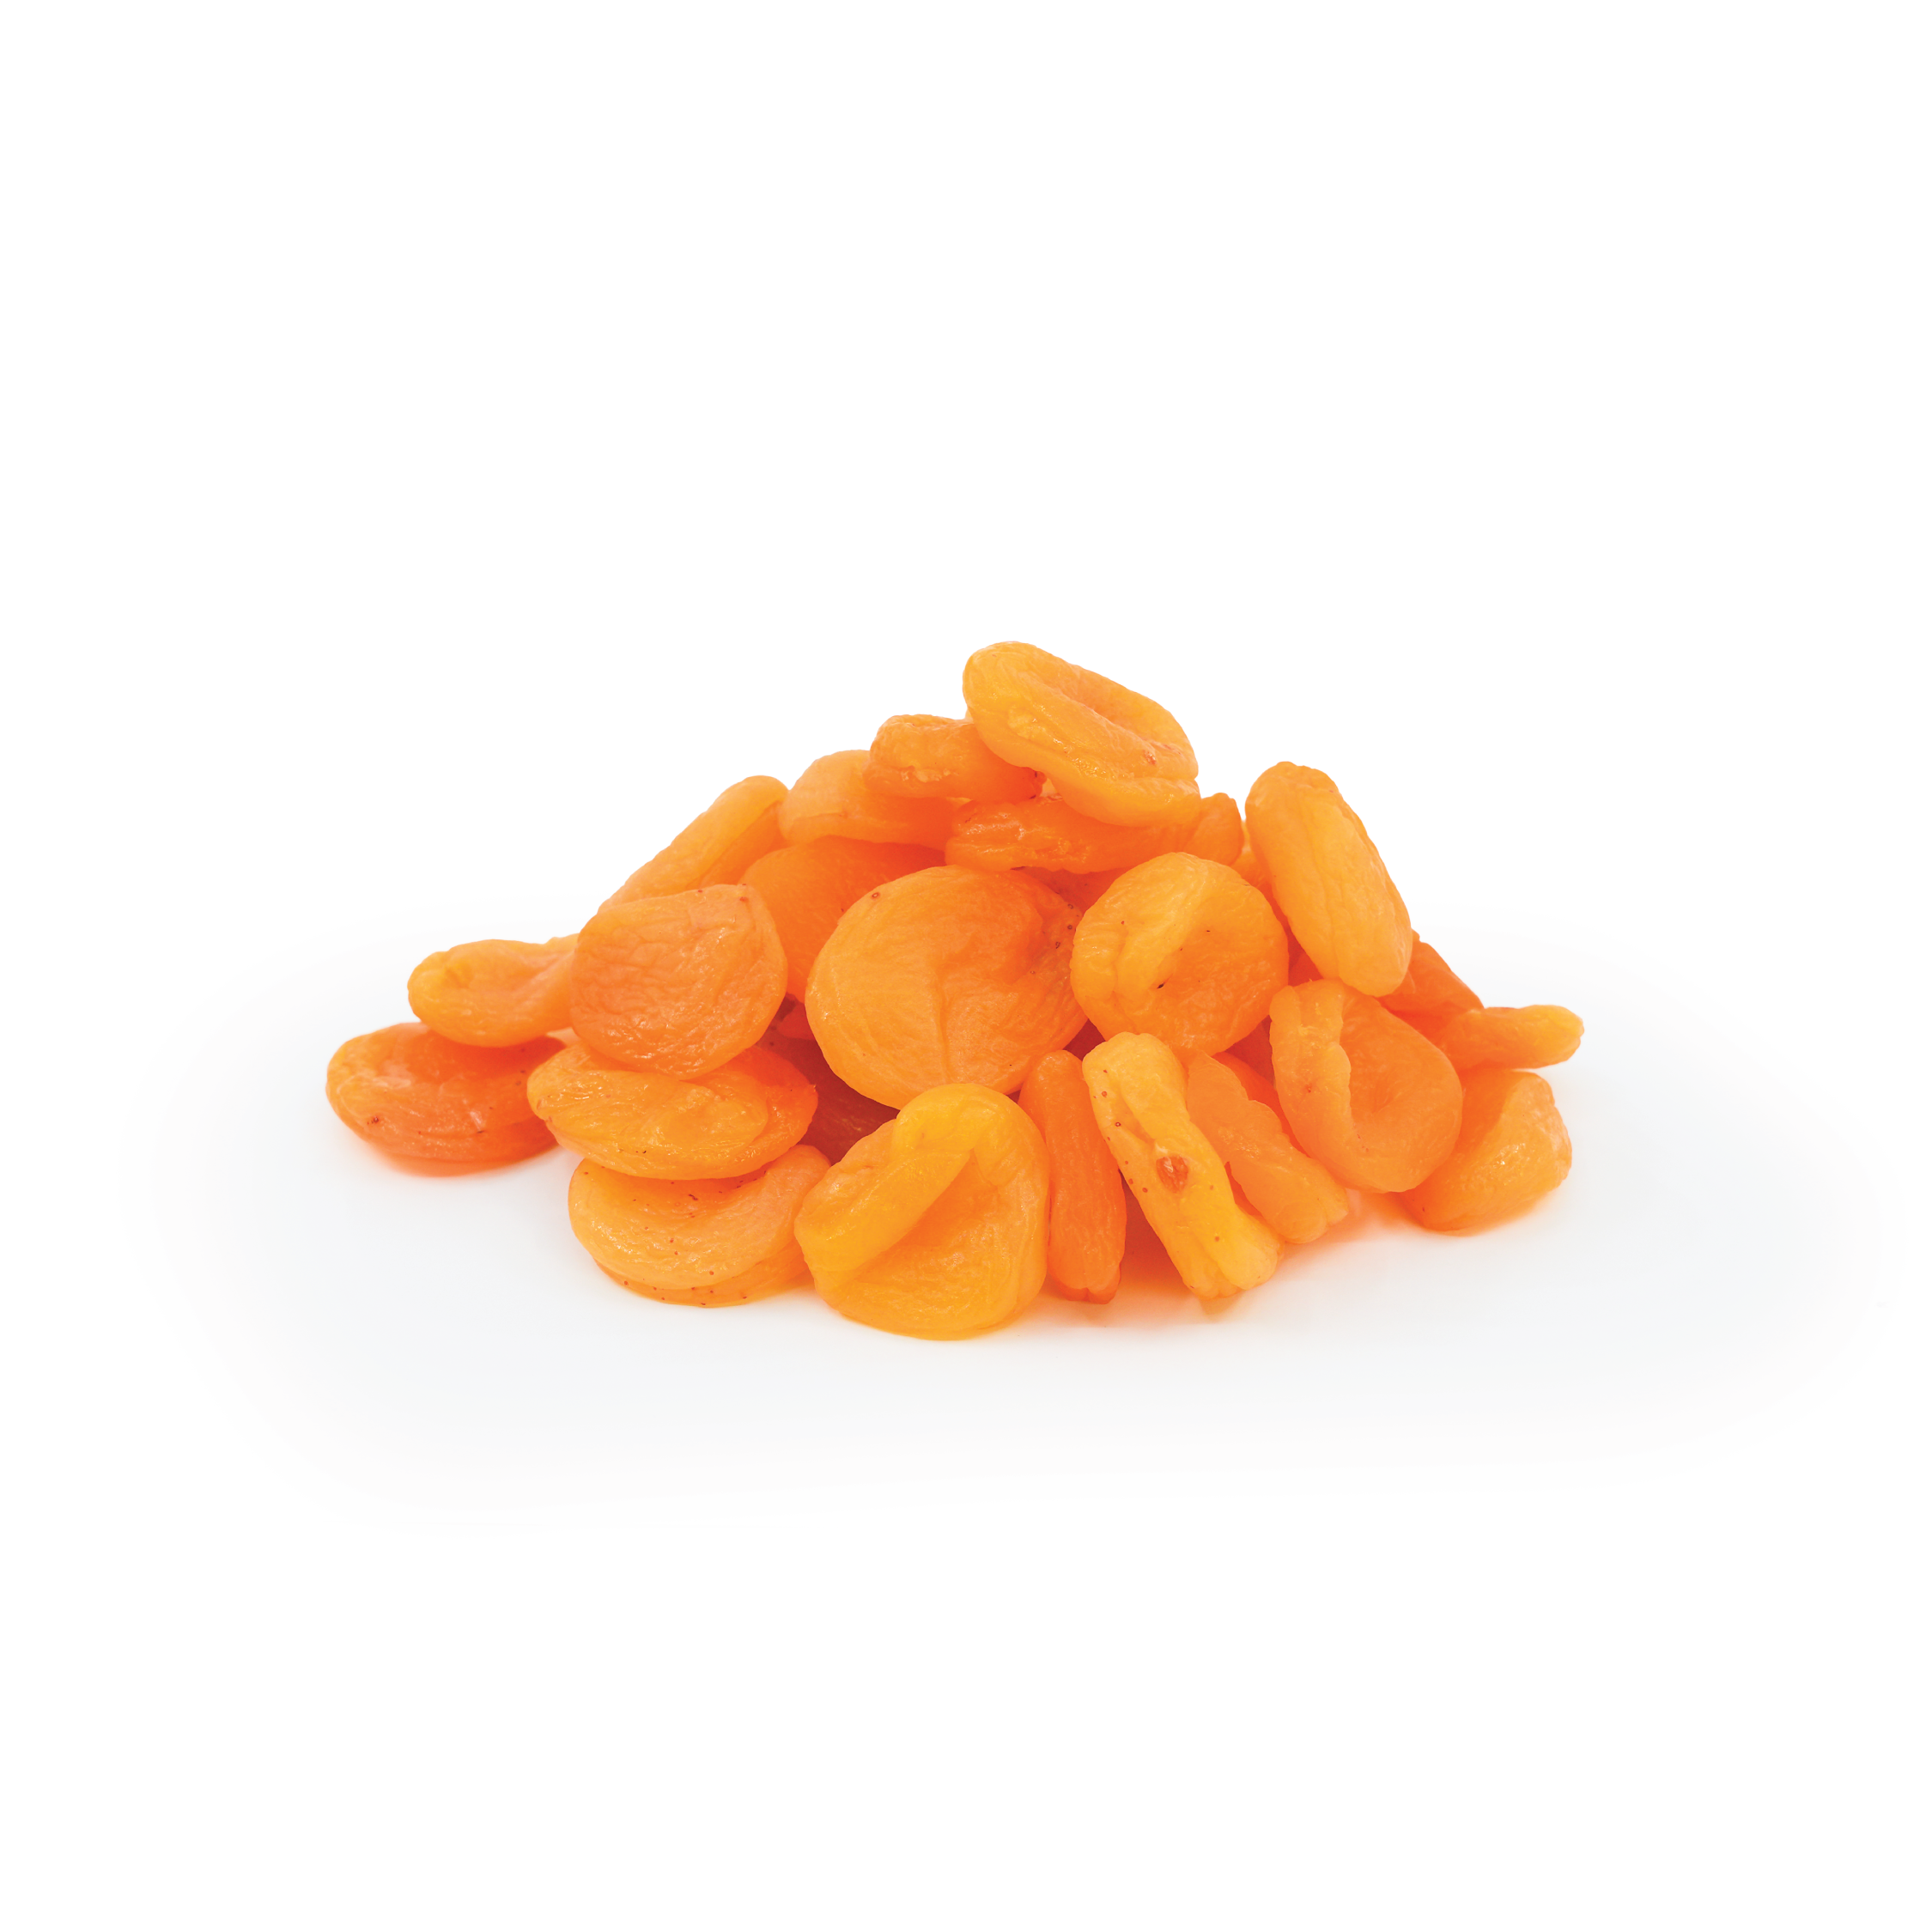 Turkish Dried Apricots - Jumbo